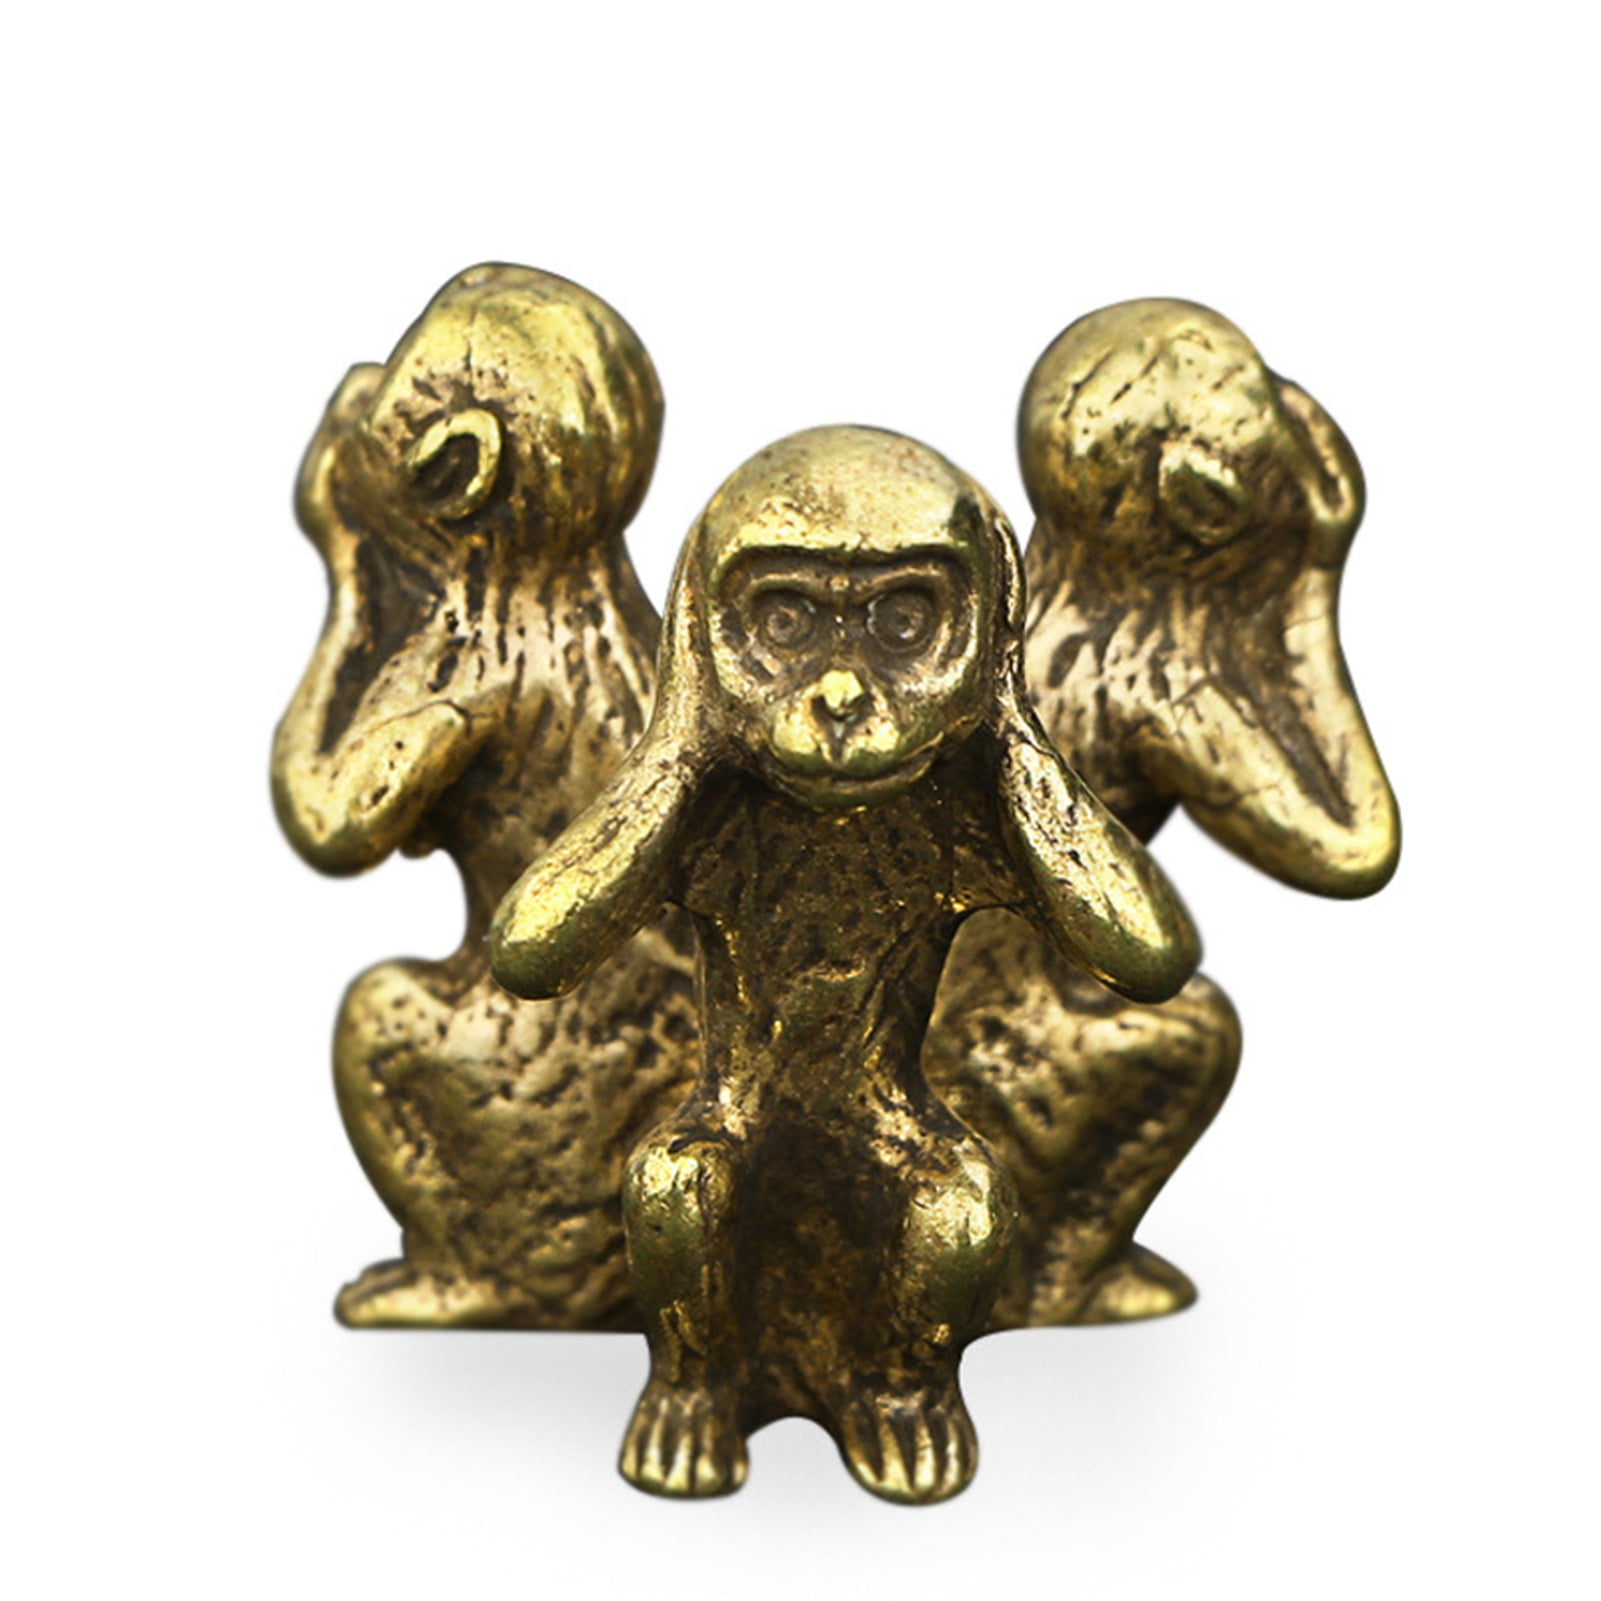 Brass Monkey Mini Animal Desk Home Ornaments Décor Figurines Sculpture Statue 